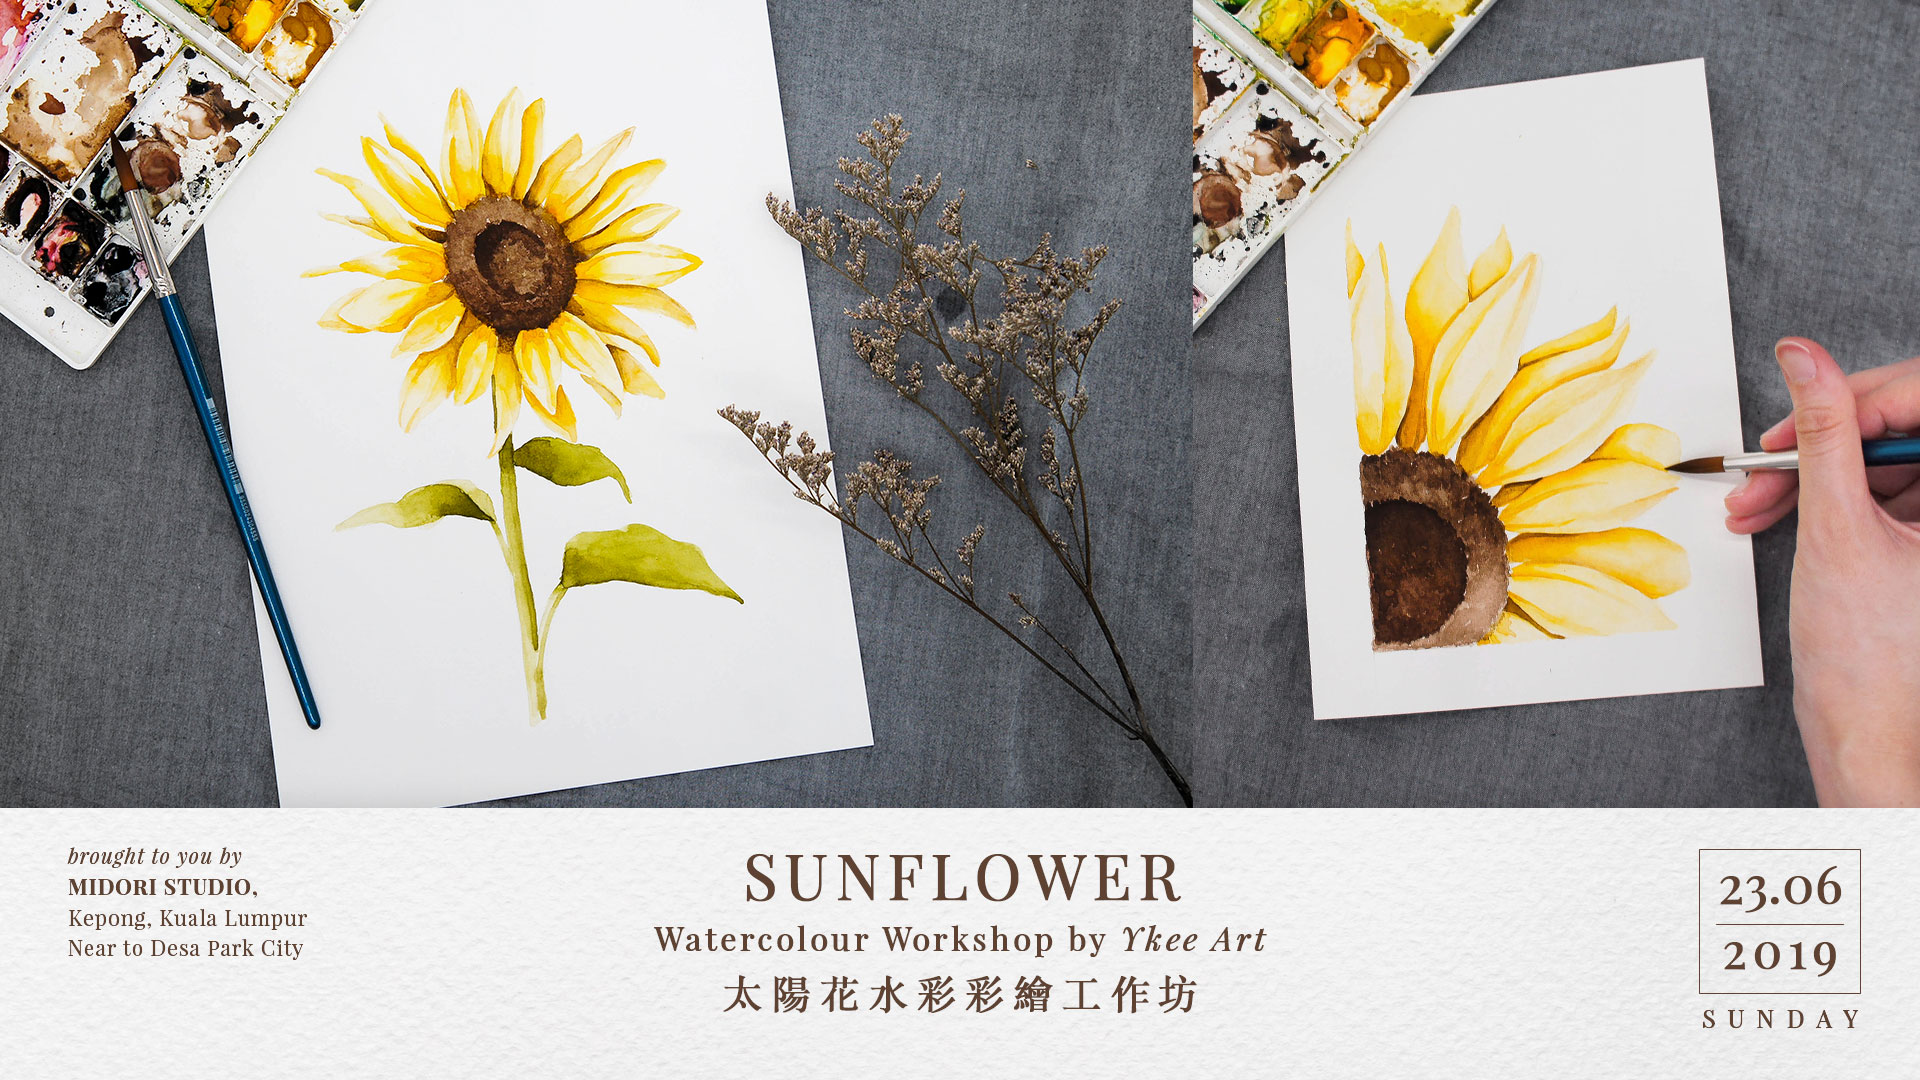 Sunflower Watercolour Workshop 太陽花水彩彩繪工作坊 Accupass 活動通